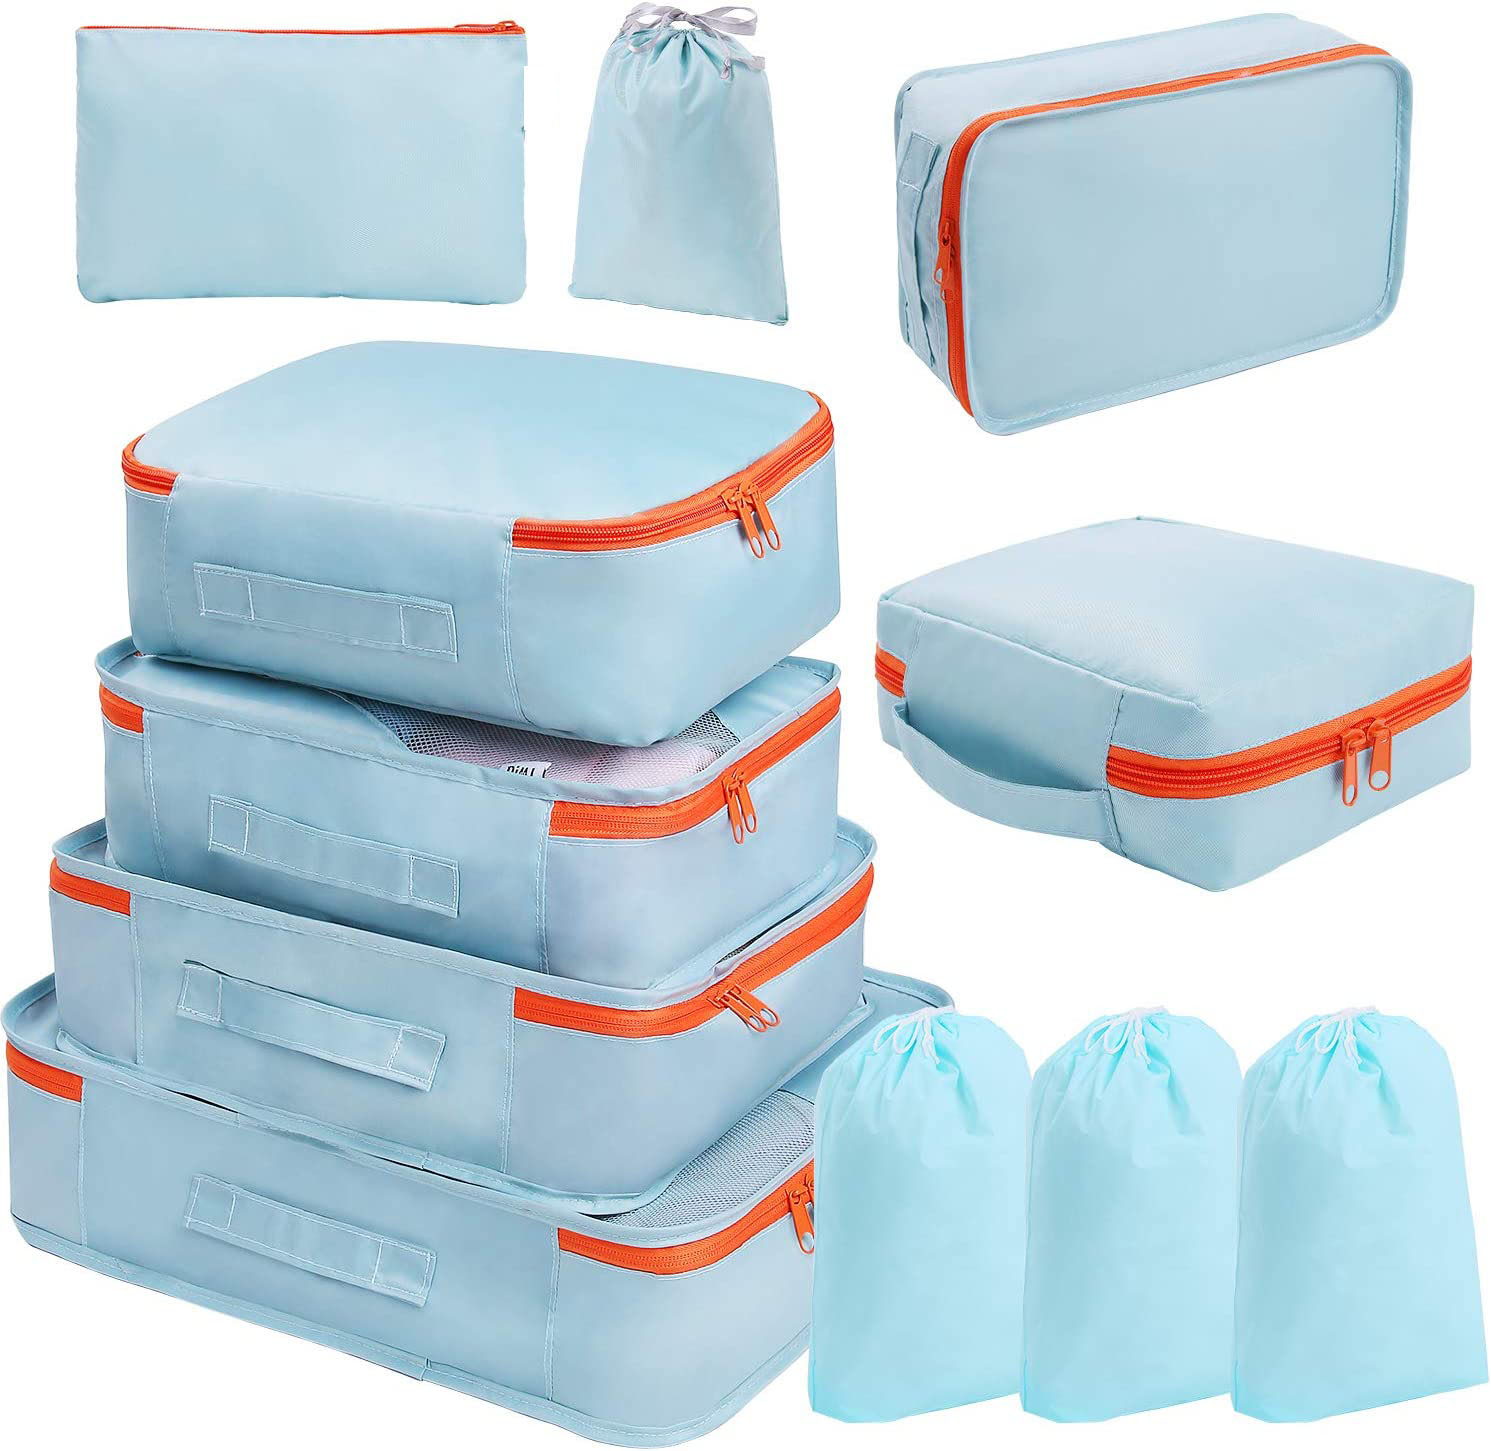 11 conjunto de cubos de embalagem organizadores de embalagem de bagagem de viagem leve saco de armazenamento de pano com sutiã roupa interior cubo cosméticos